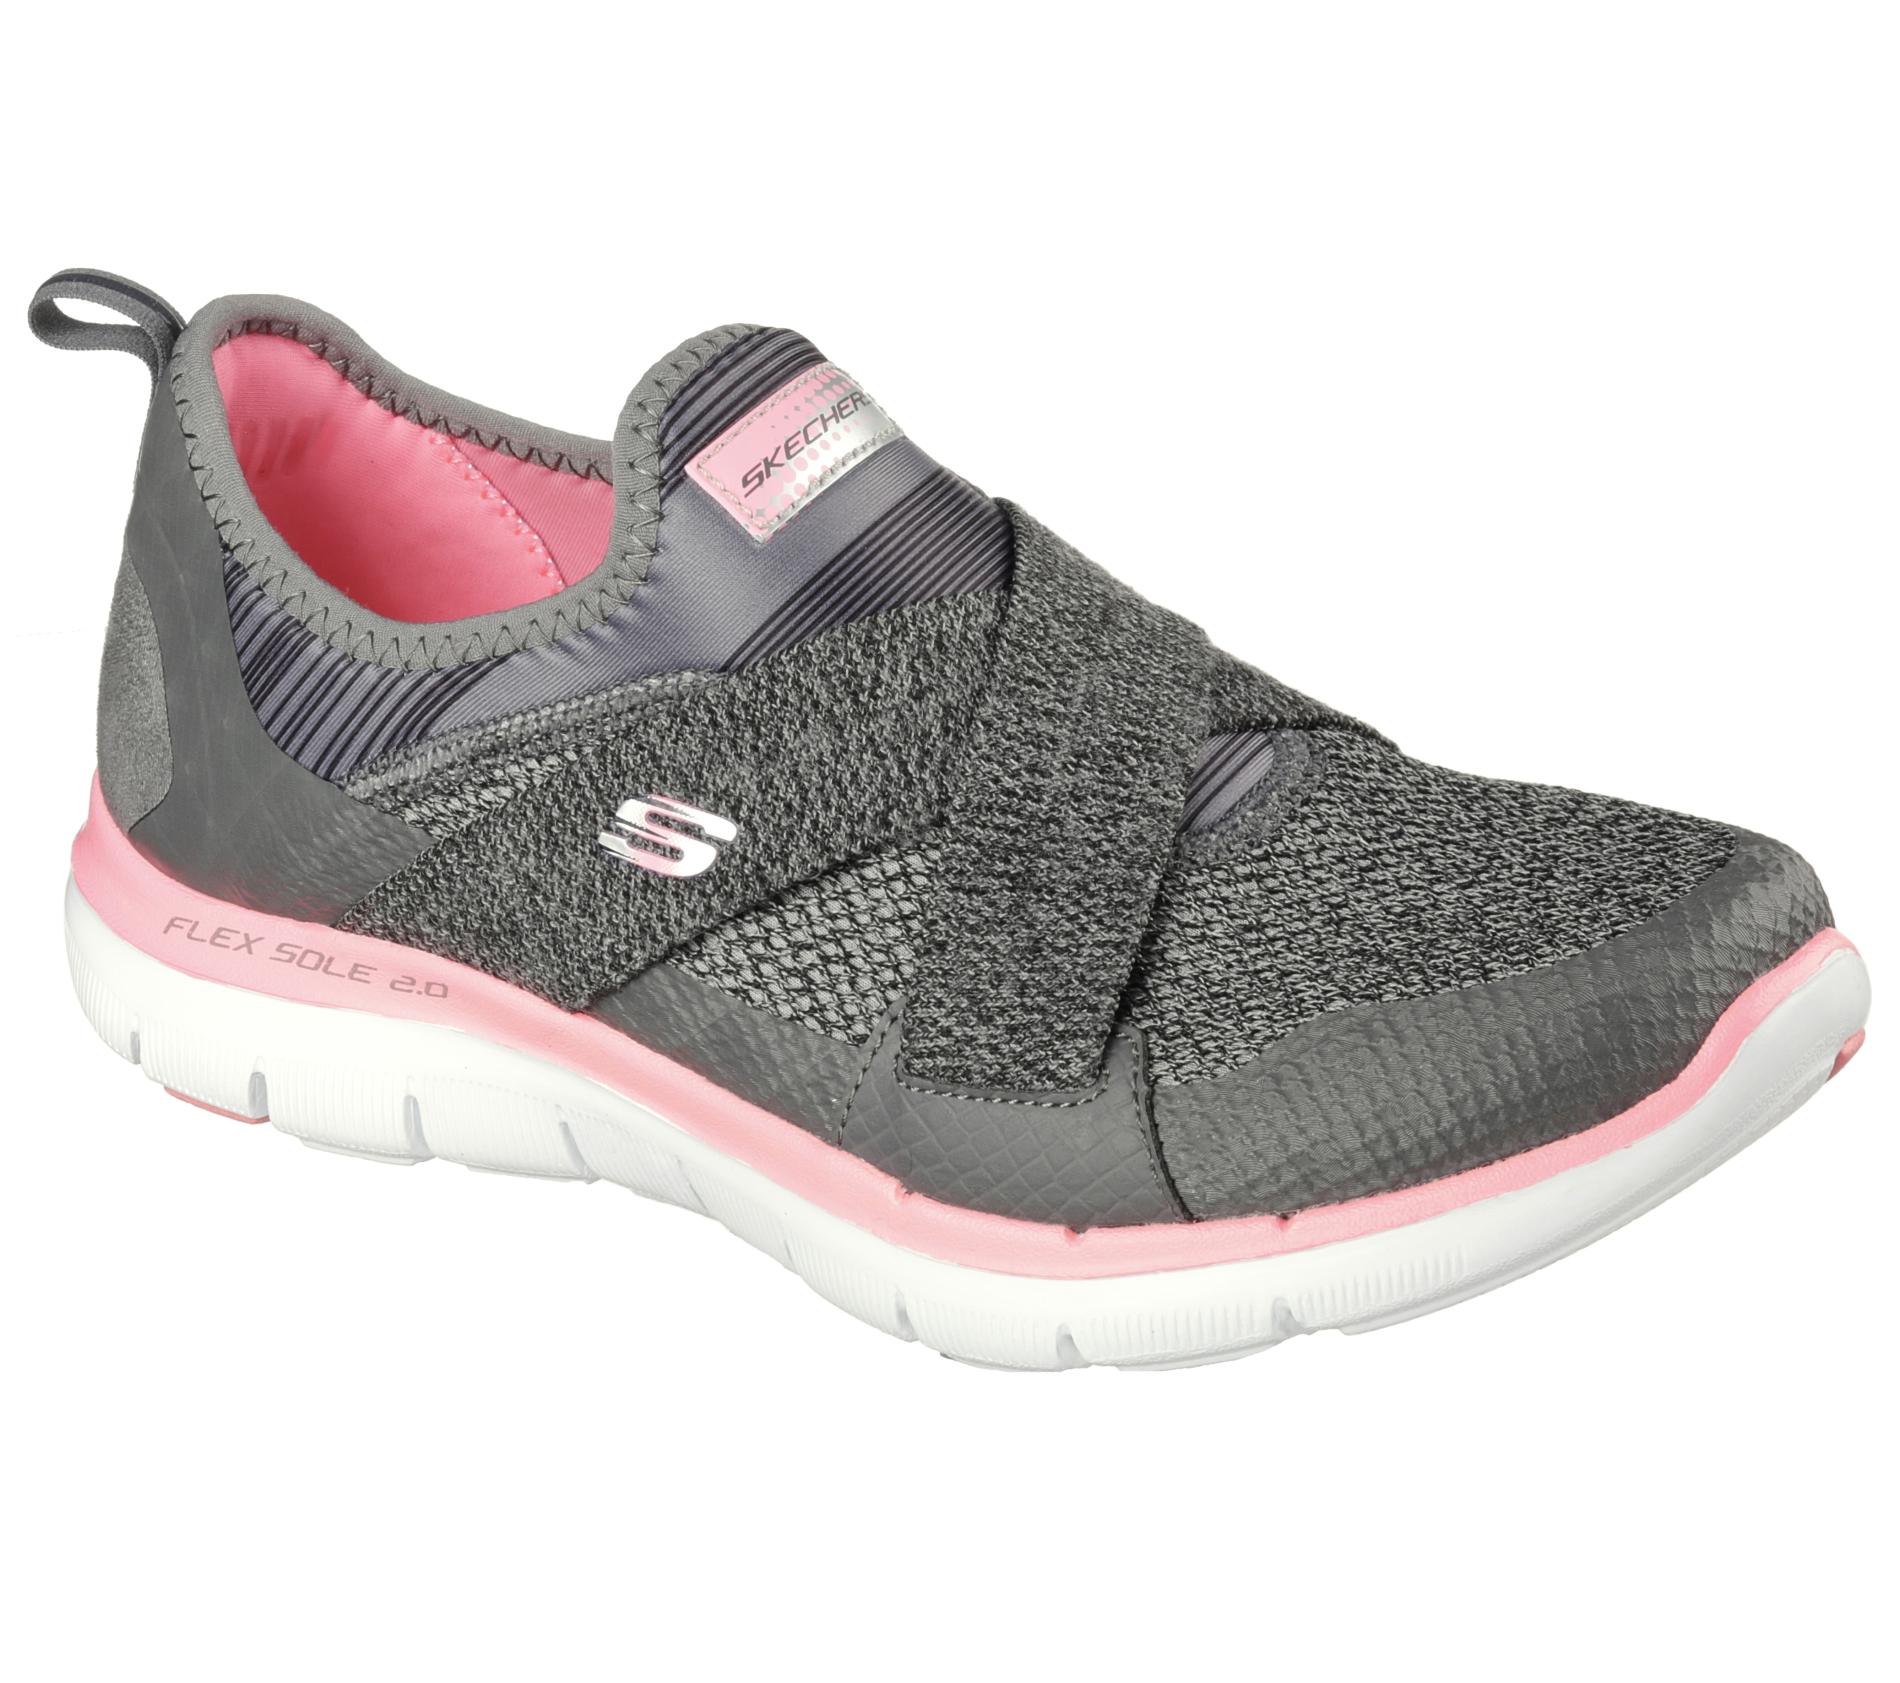 Skechers Women's New Image Sneaker - Gray/PInk